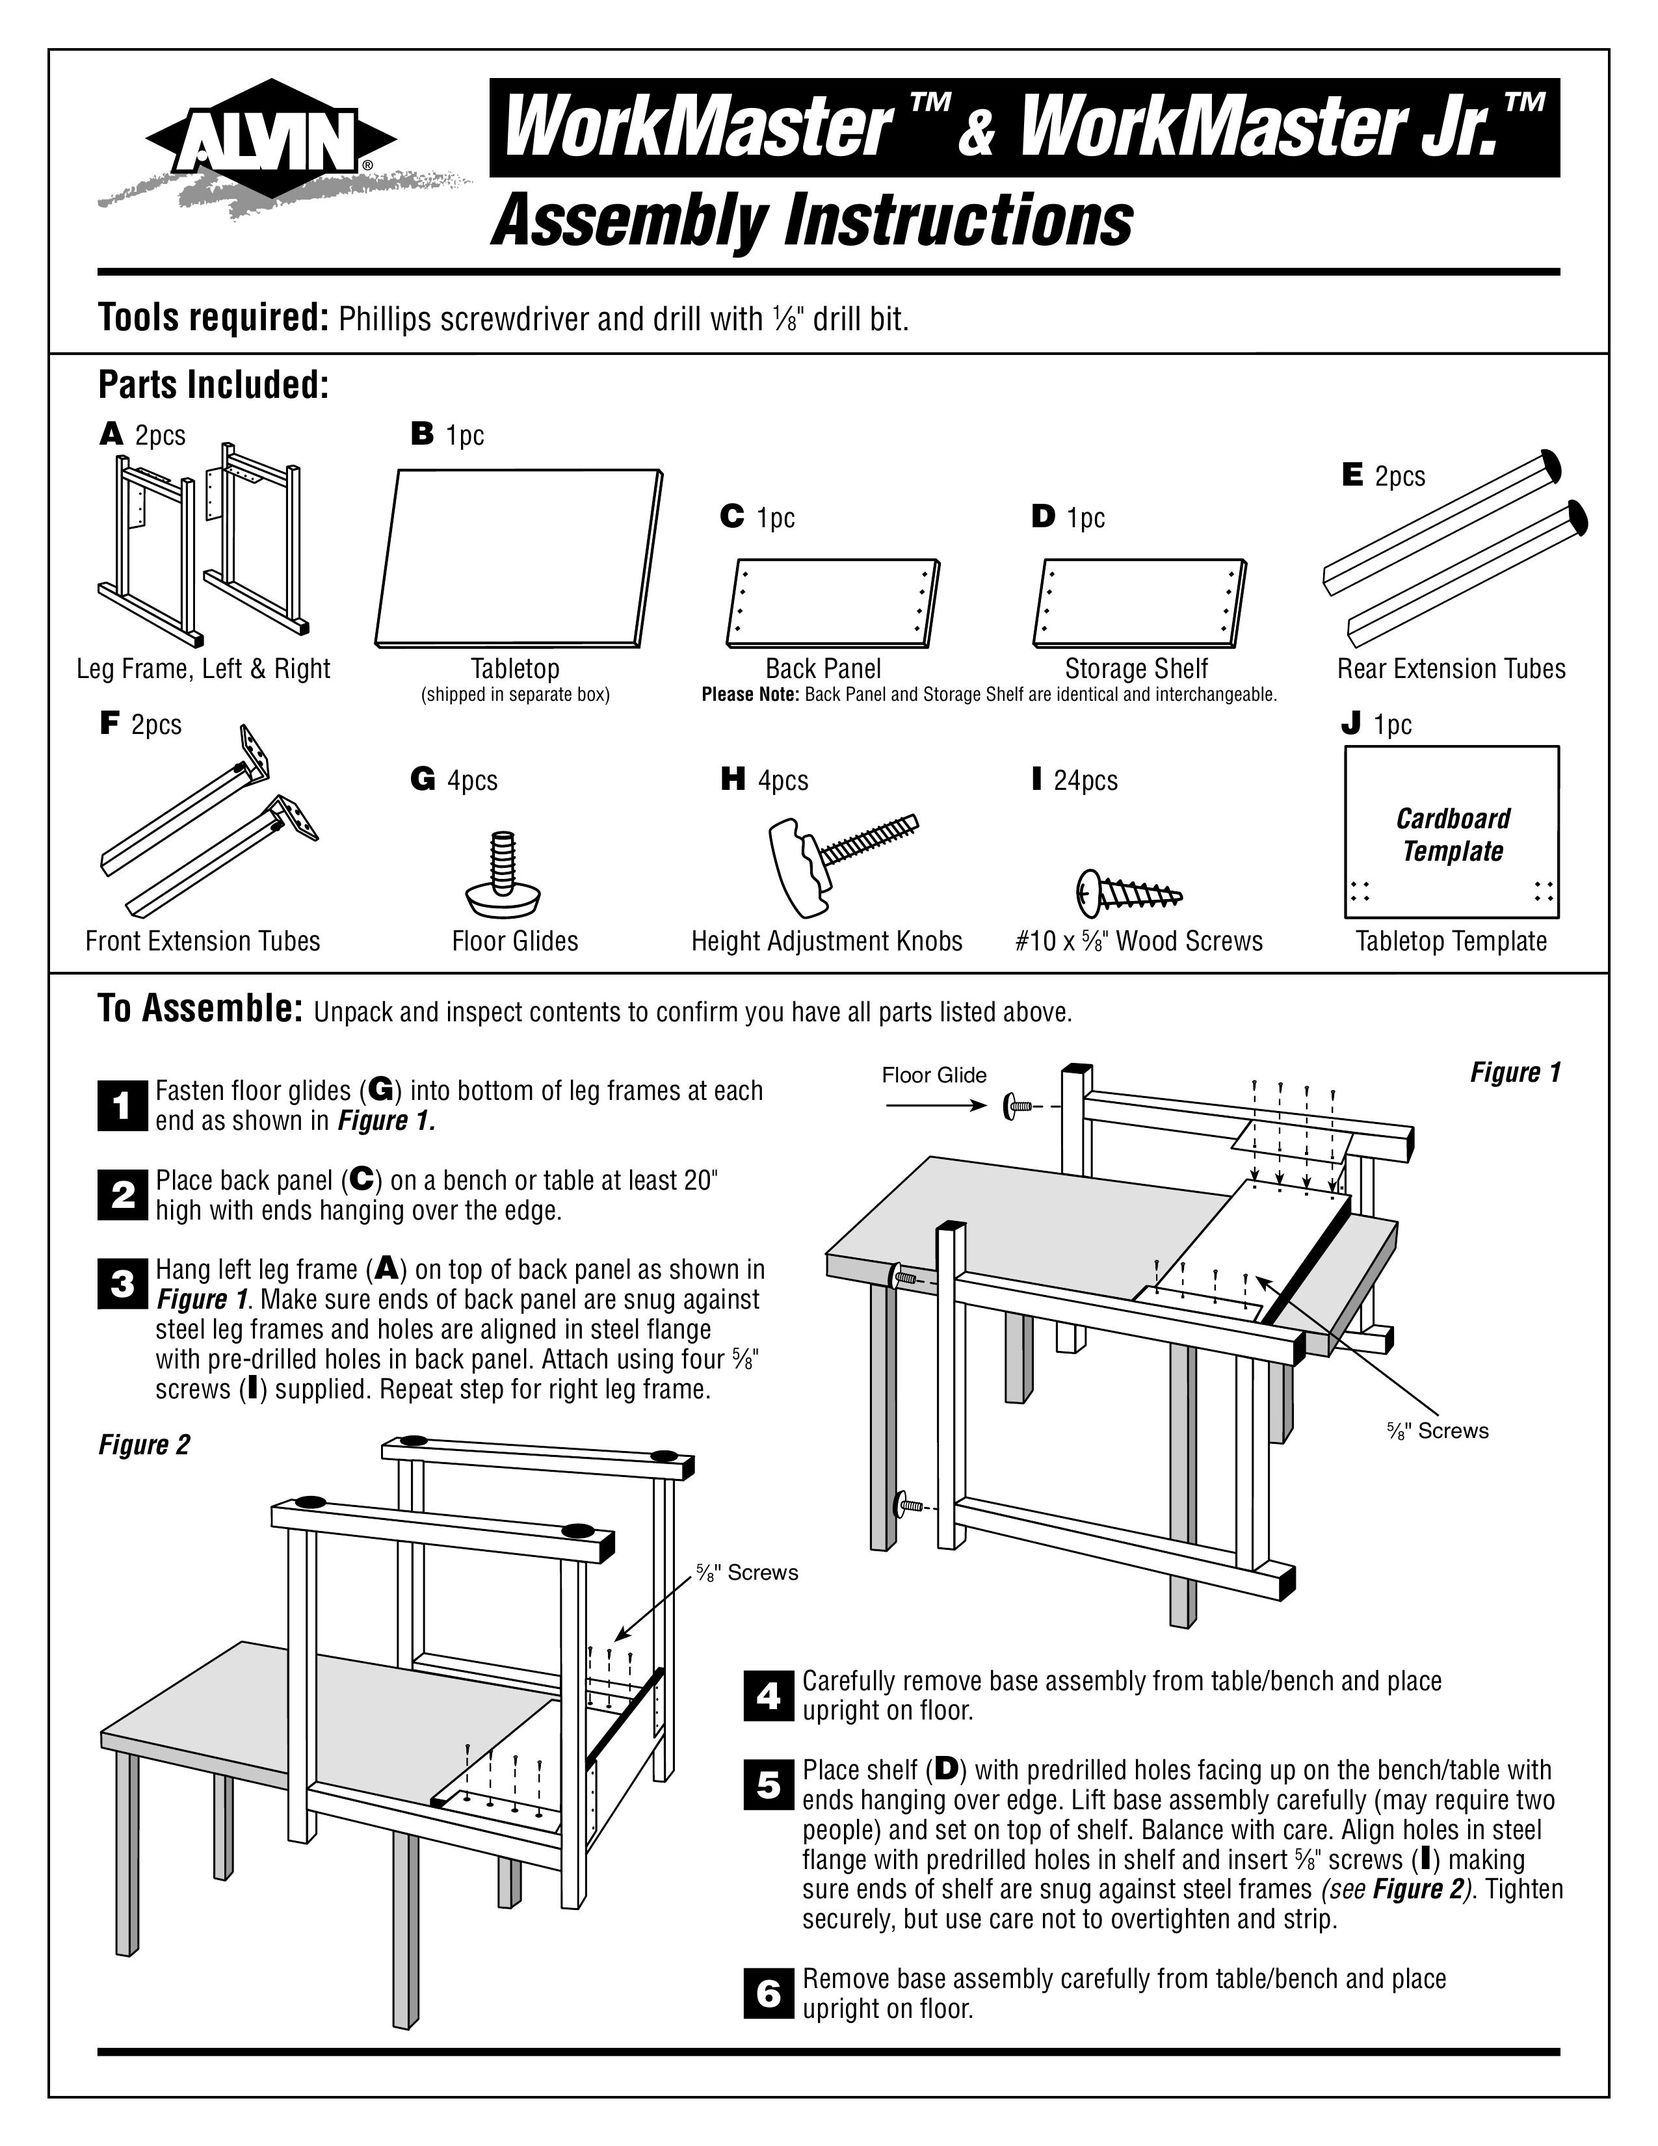 Alvin WorkMaster Indoor Furnishings User Manual